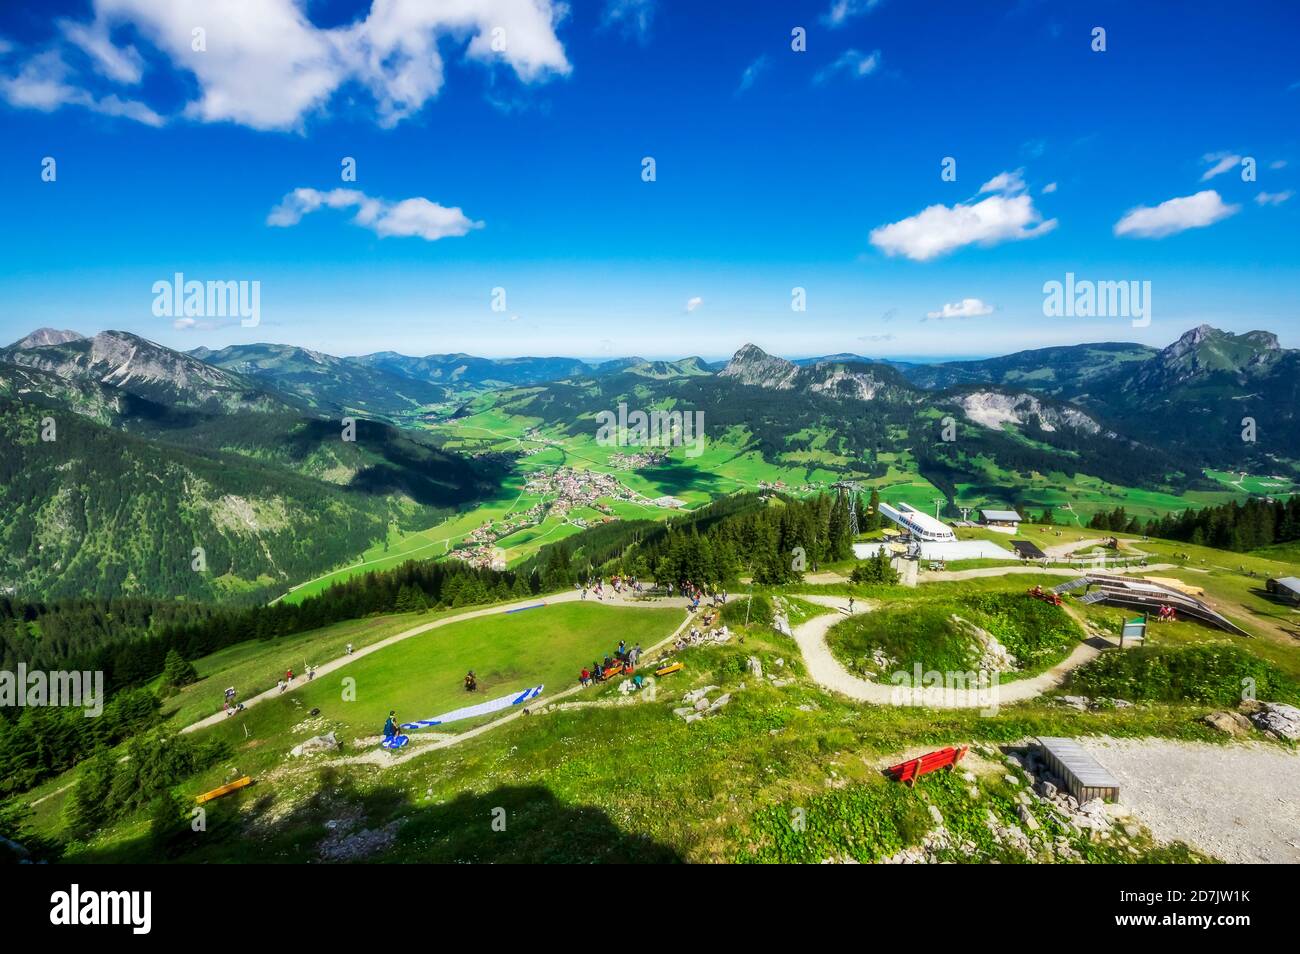 Austria, Tyrol, Tourist resort in sunny Tannheimer Tal Stock Photo